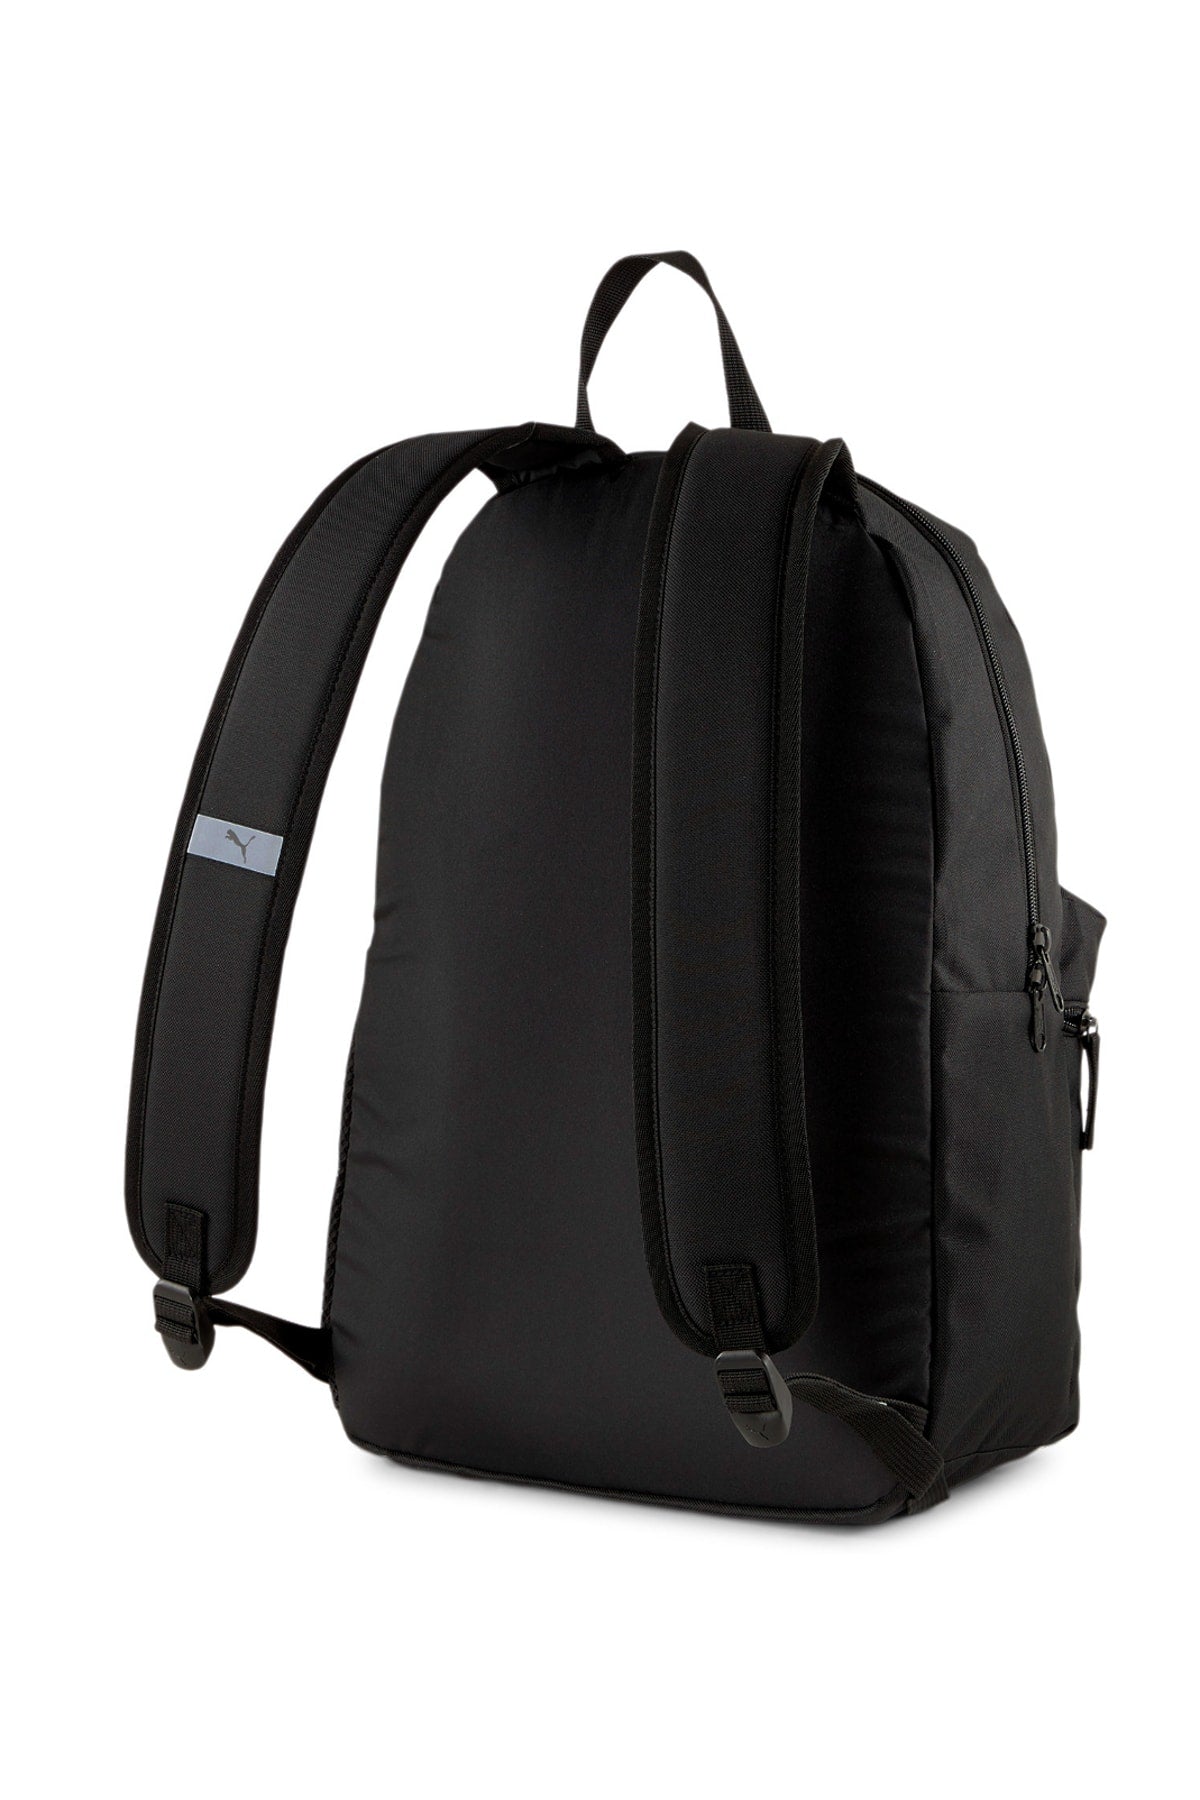 Phase Backpack - Unisex Black Backpack 44x30x14